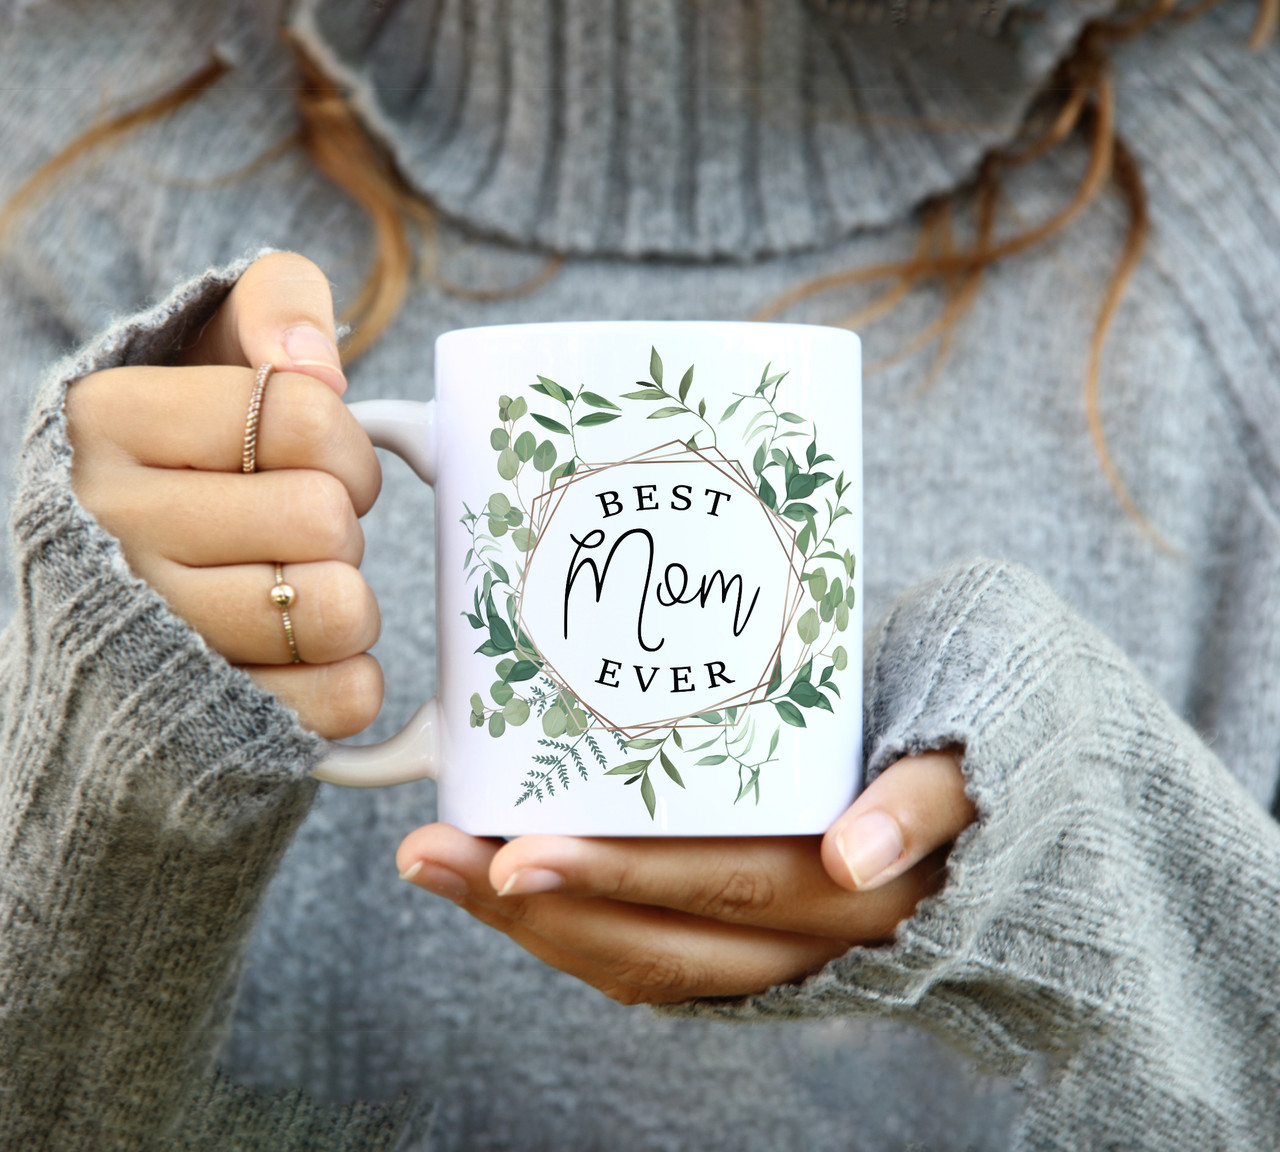 Best Mom Ever Coffee Mug – The Jewelry Bx